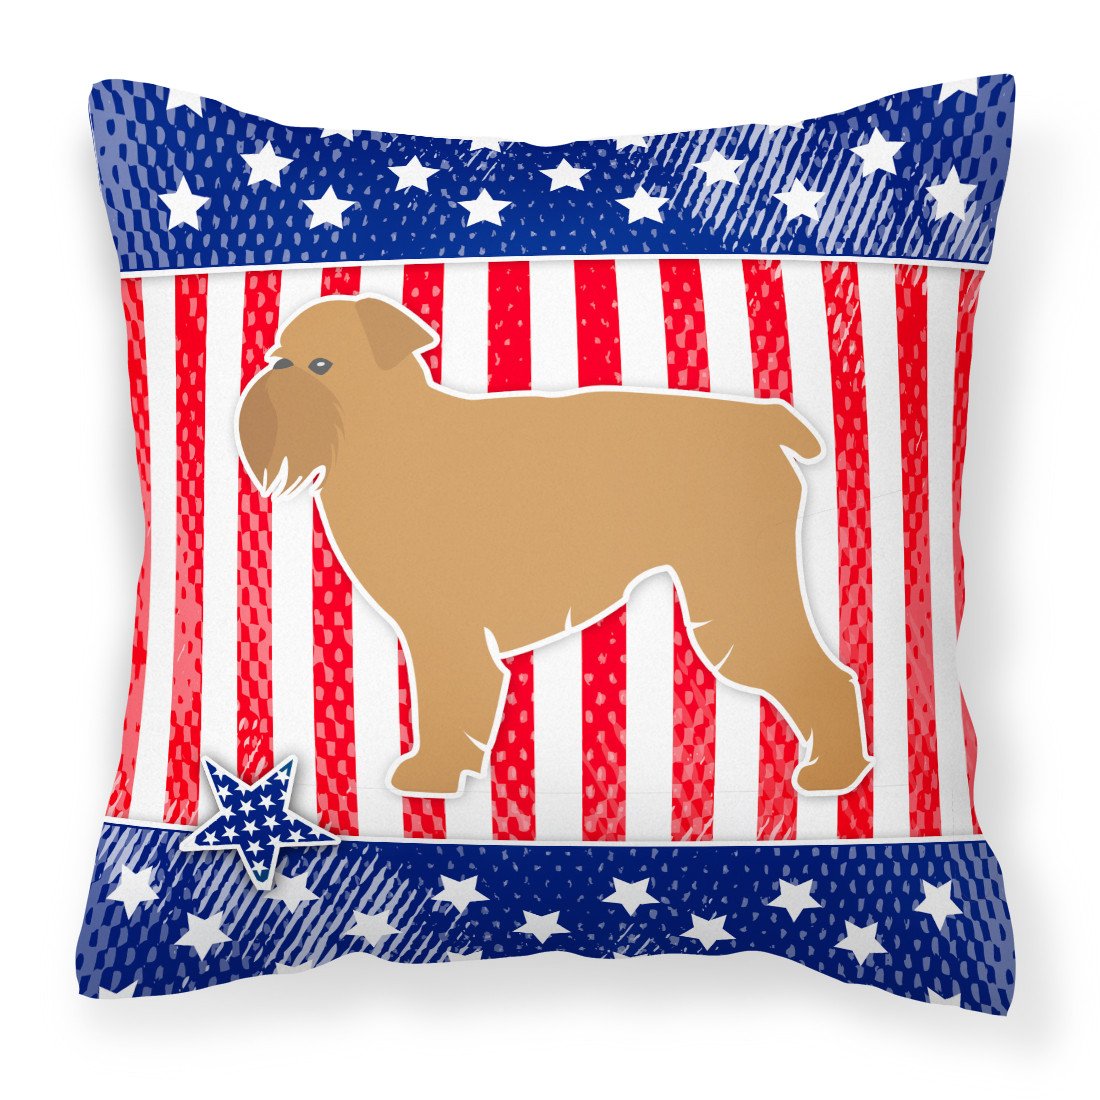 USA Patriotic Brussels Griffon Fabric Decorative Pillow BB3340PW1818 by Caroline's Treasures